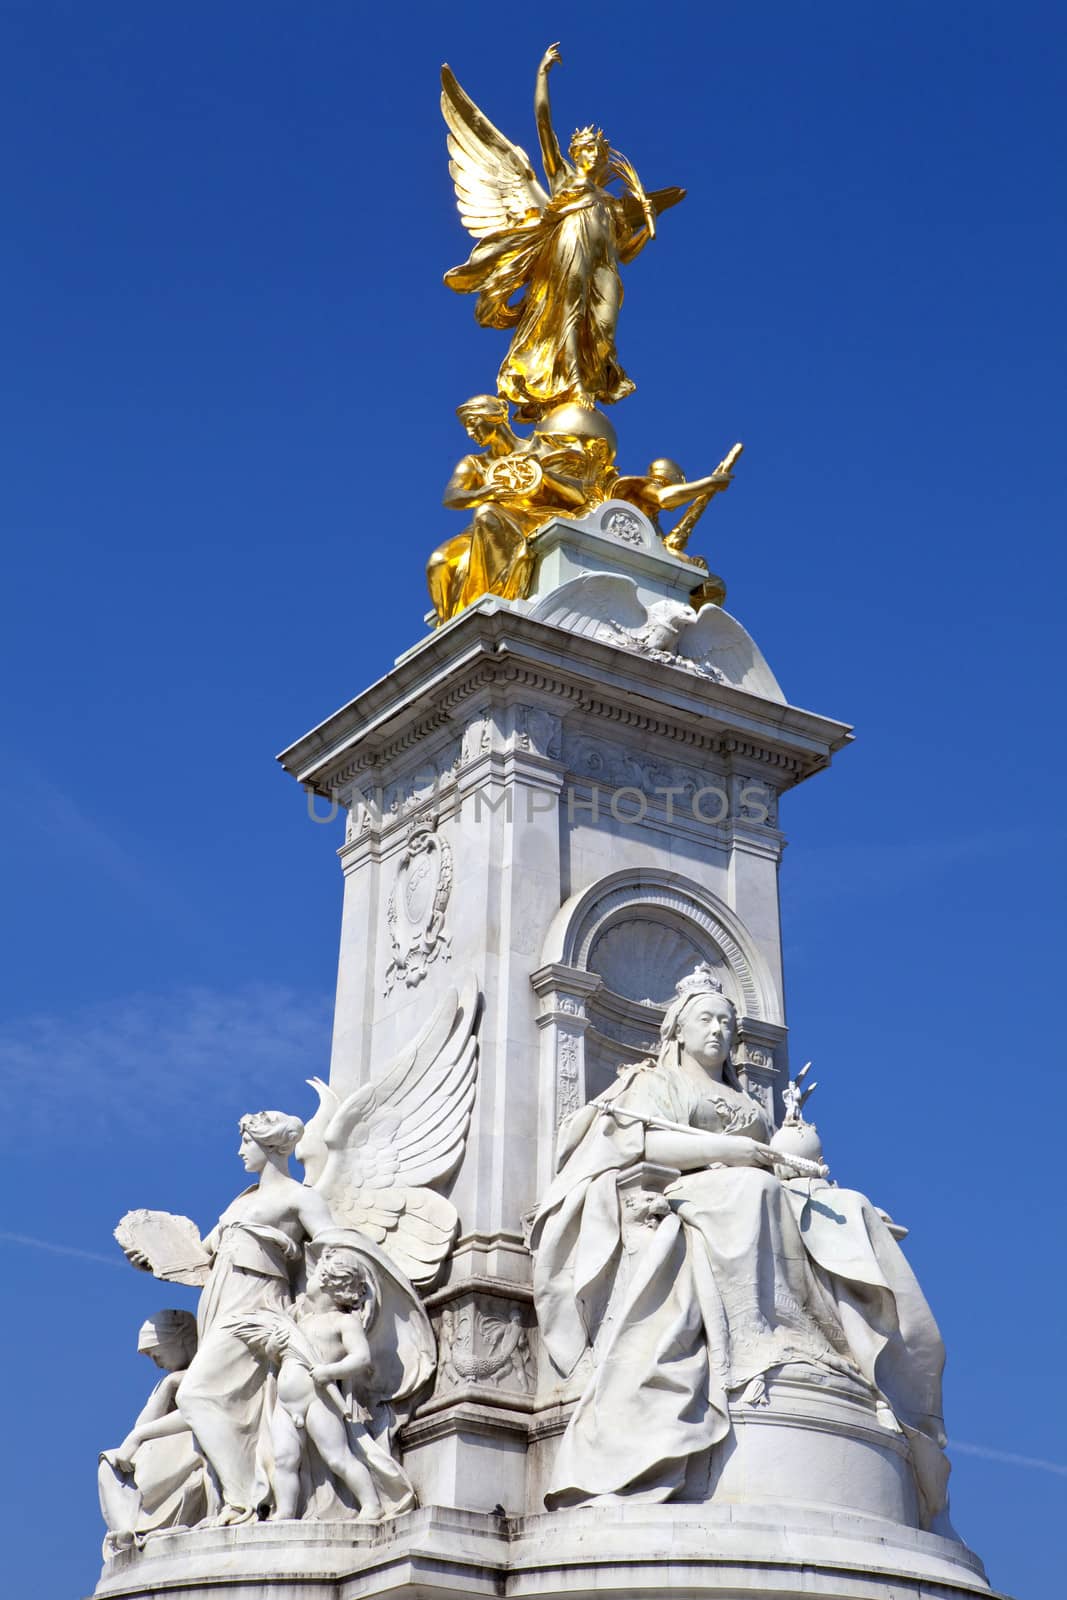 Victoria Memorial in London by chrisdorney